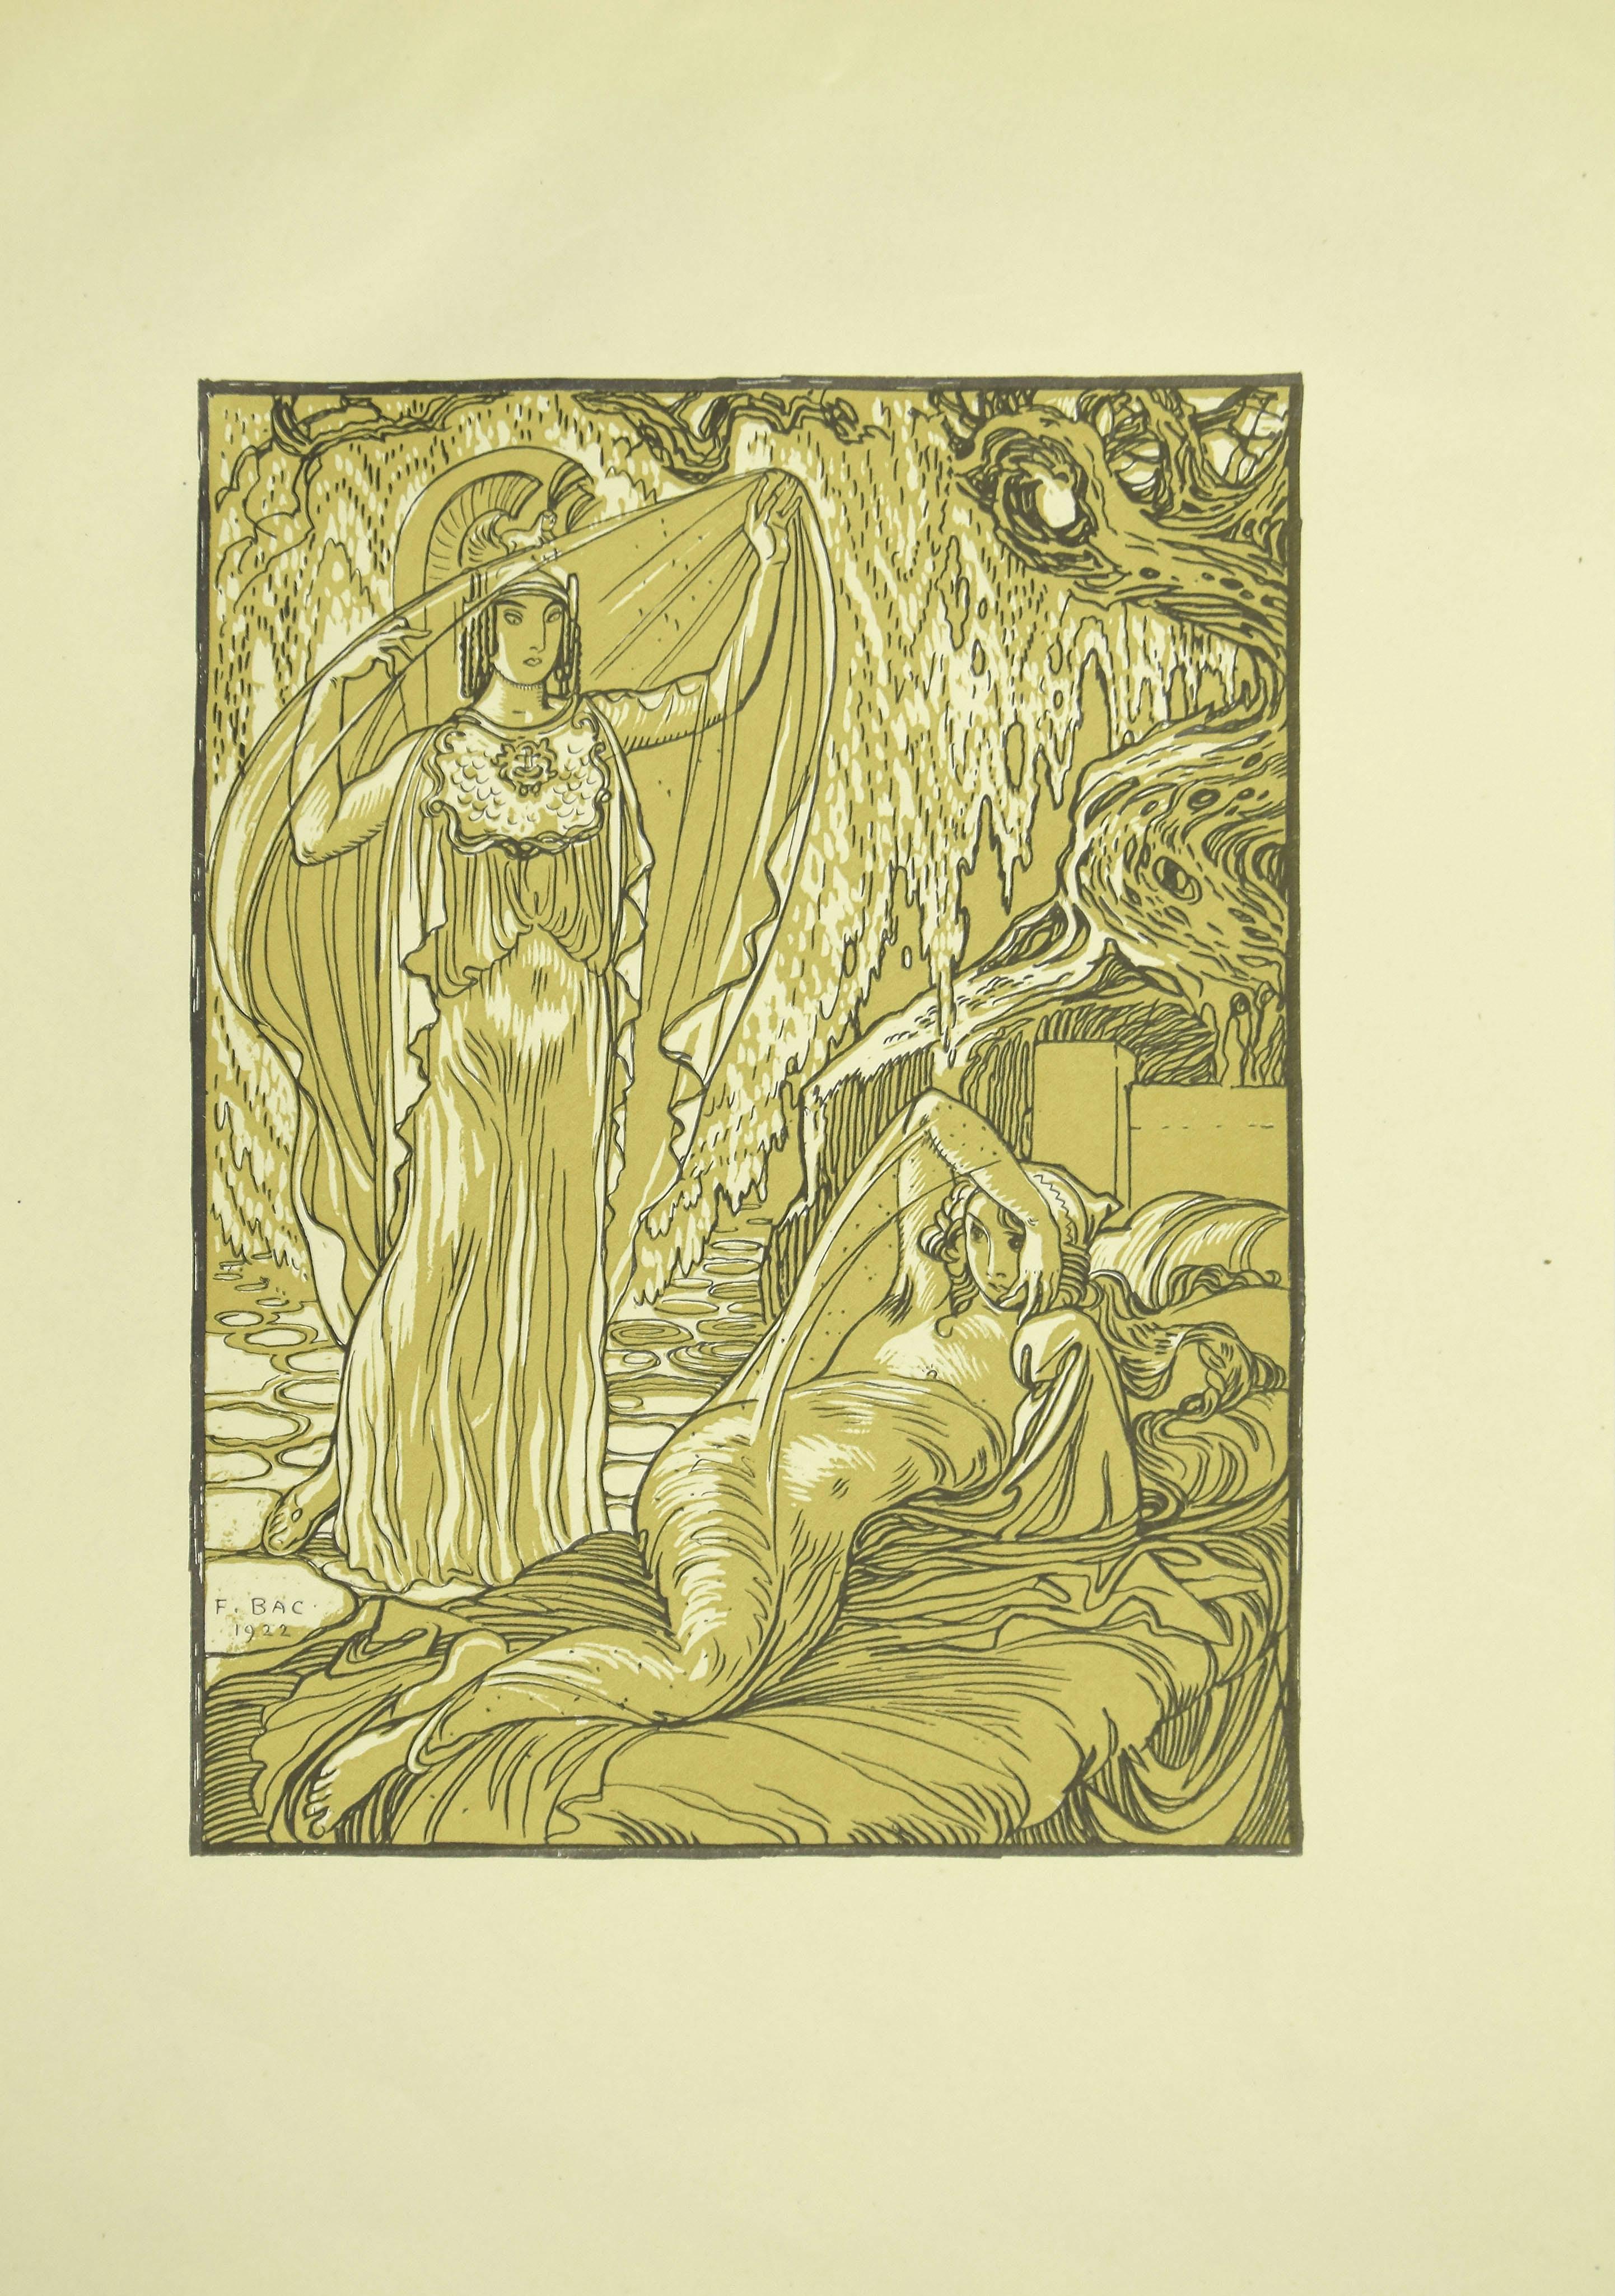 Ferdinand Bac Figurative Print - The Awakening - Original Lithograph by F. Bac - 1922